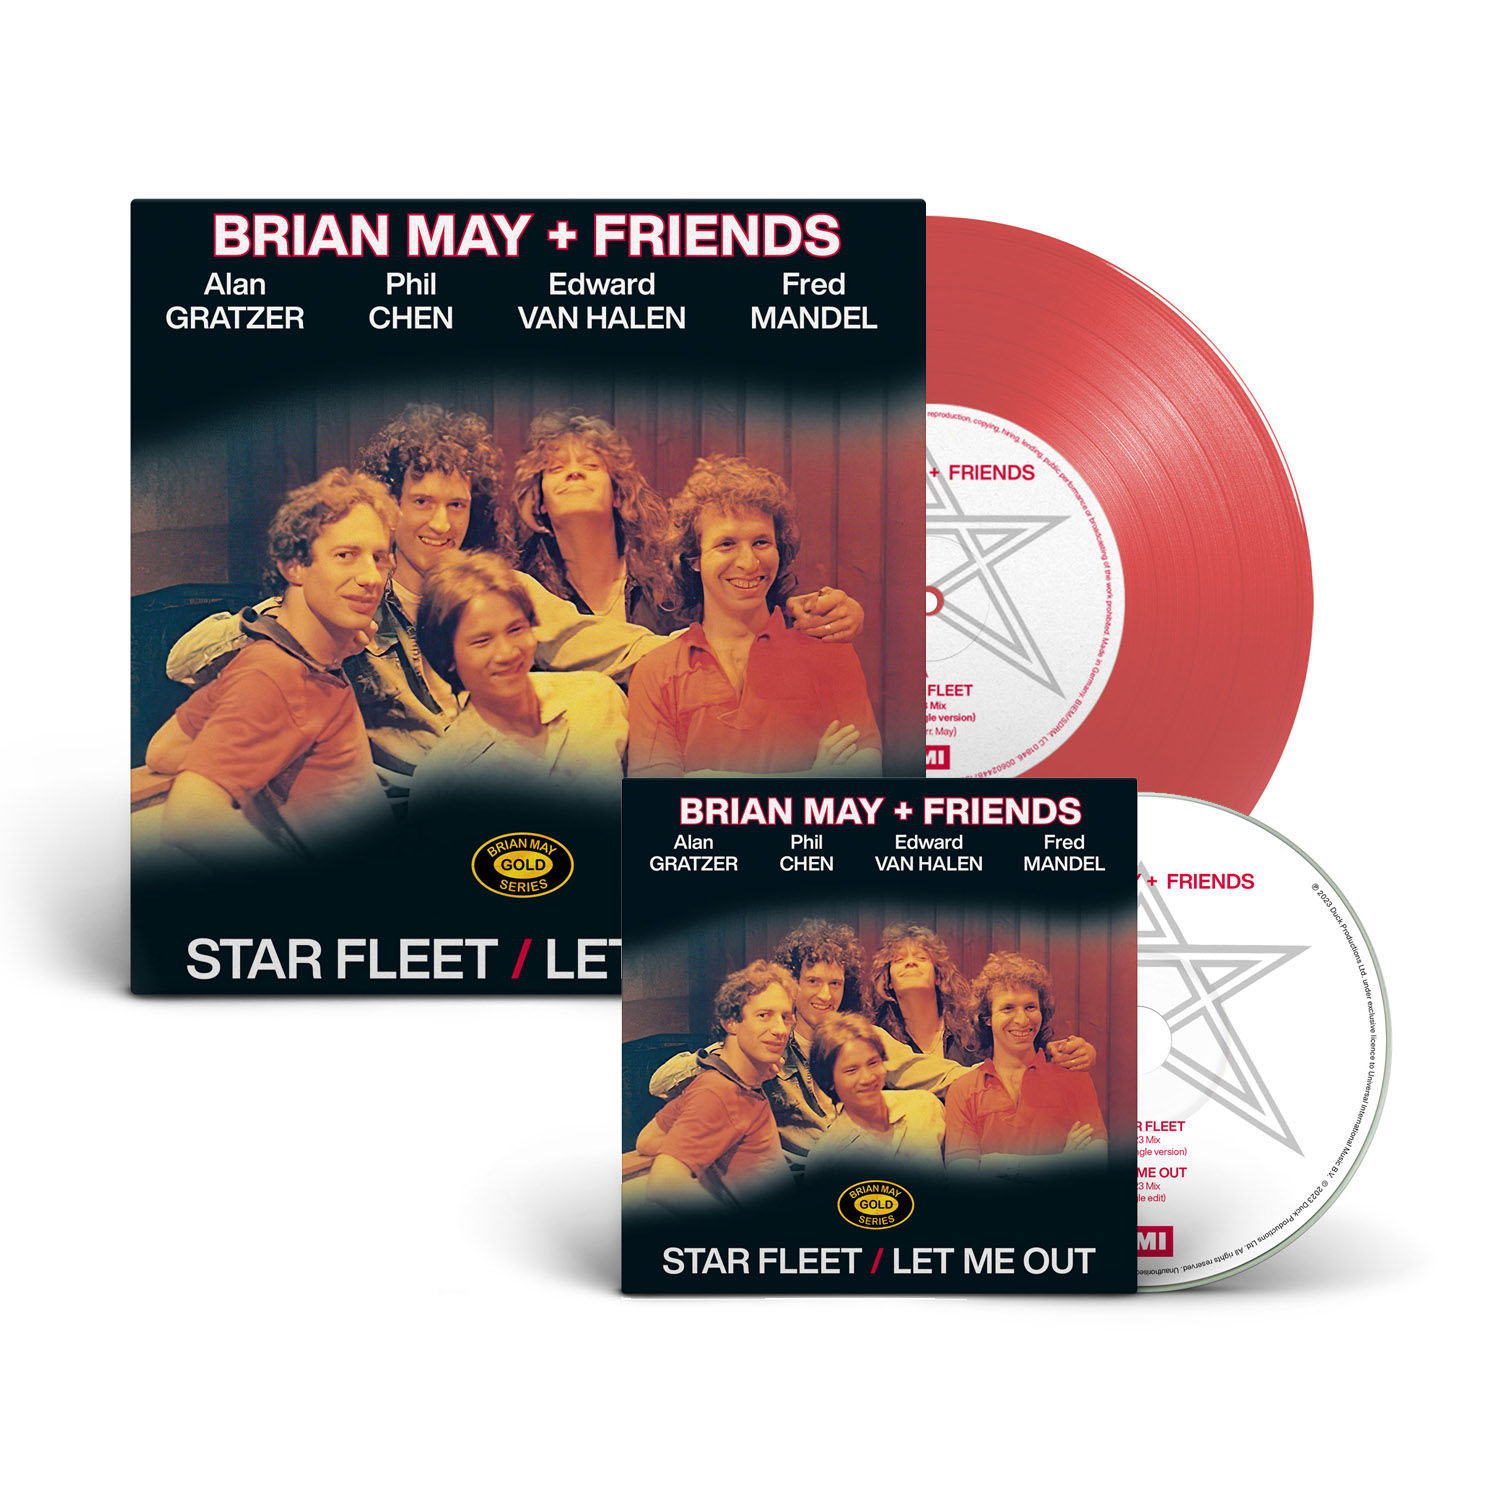 Star Fleet Red Viny single and CD